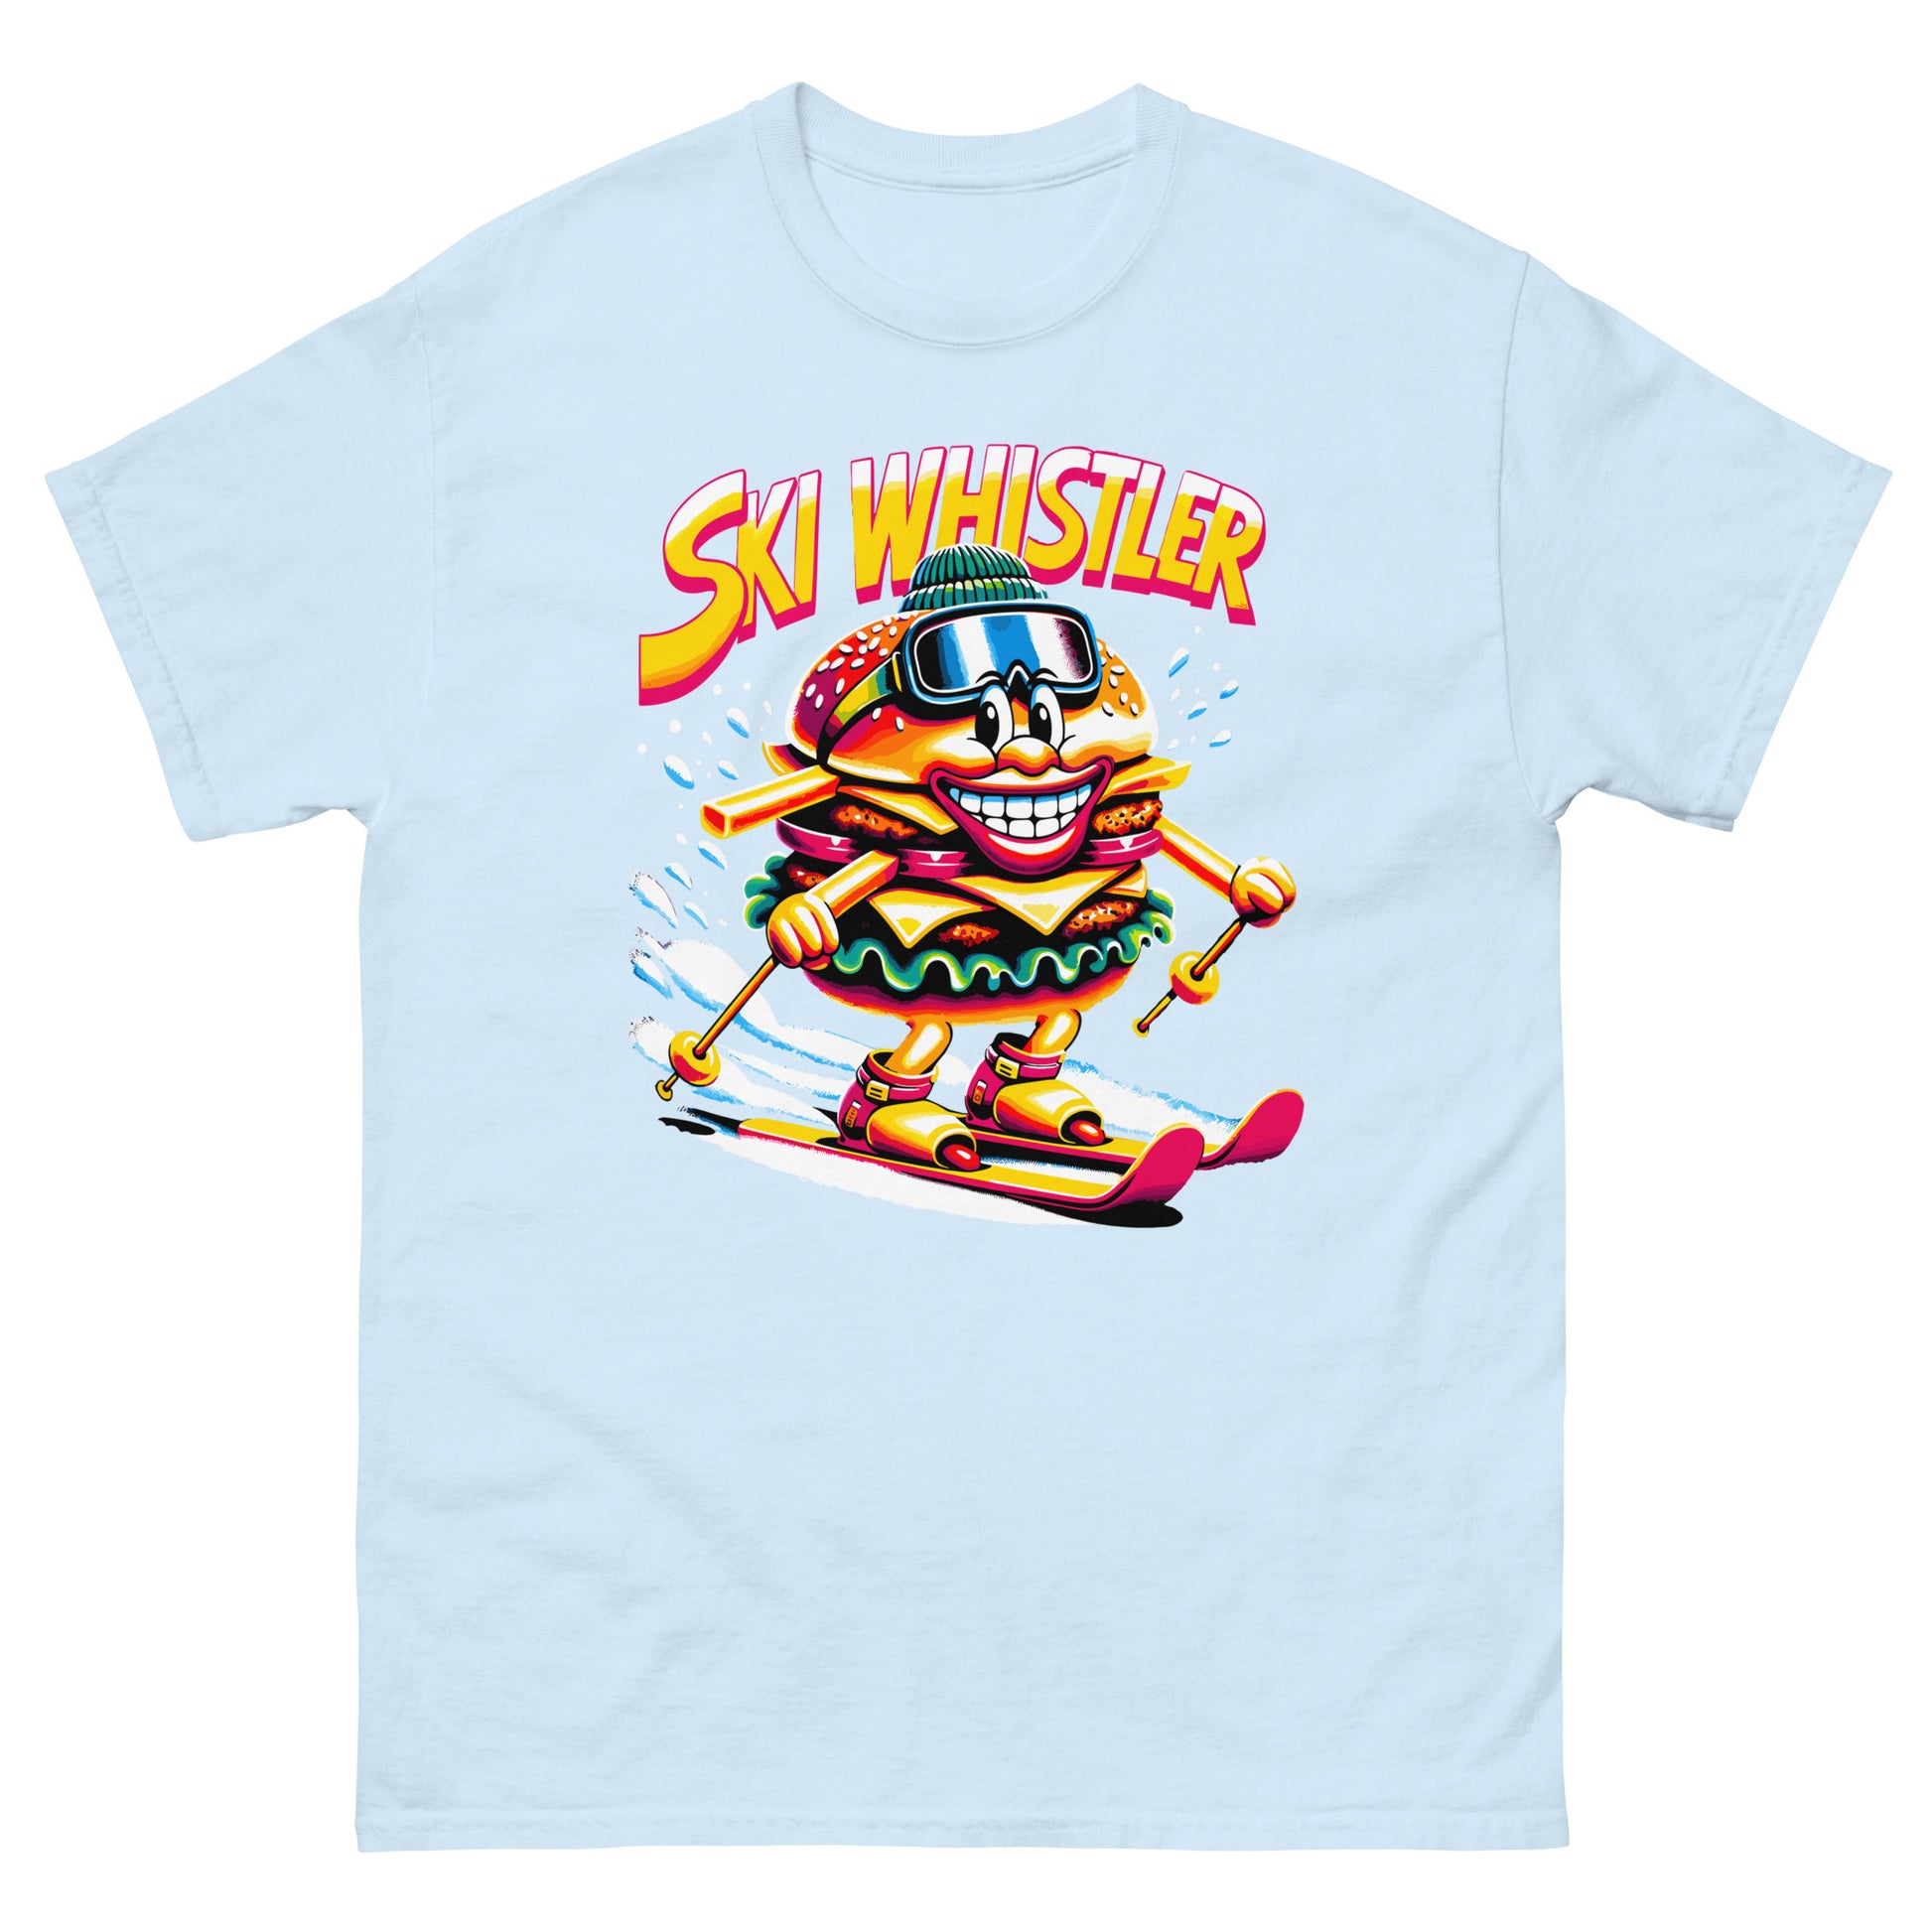 Ski Whistler Hamburger Man printed by Whistler Shirts